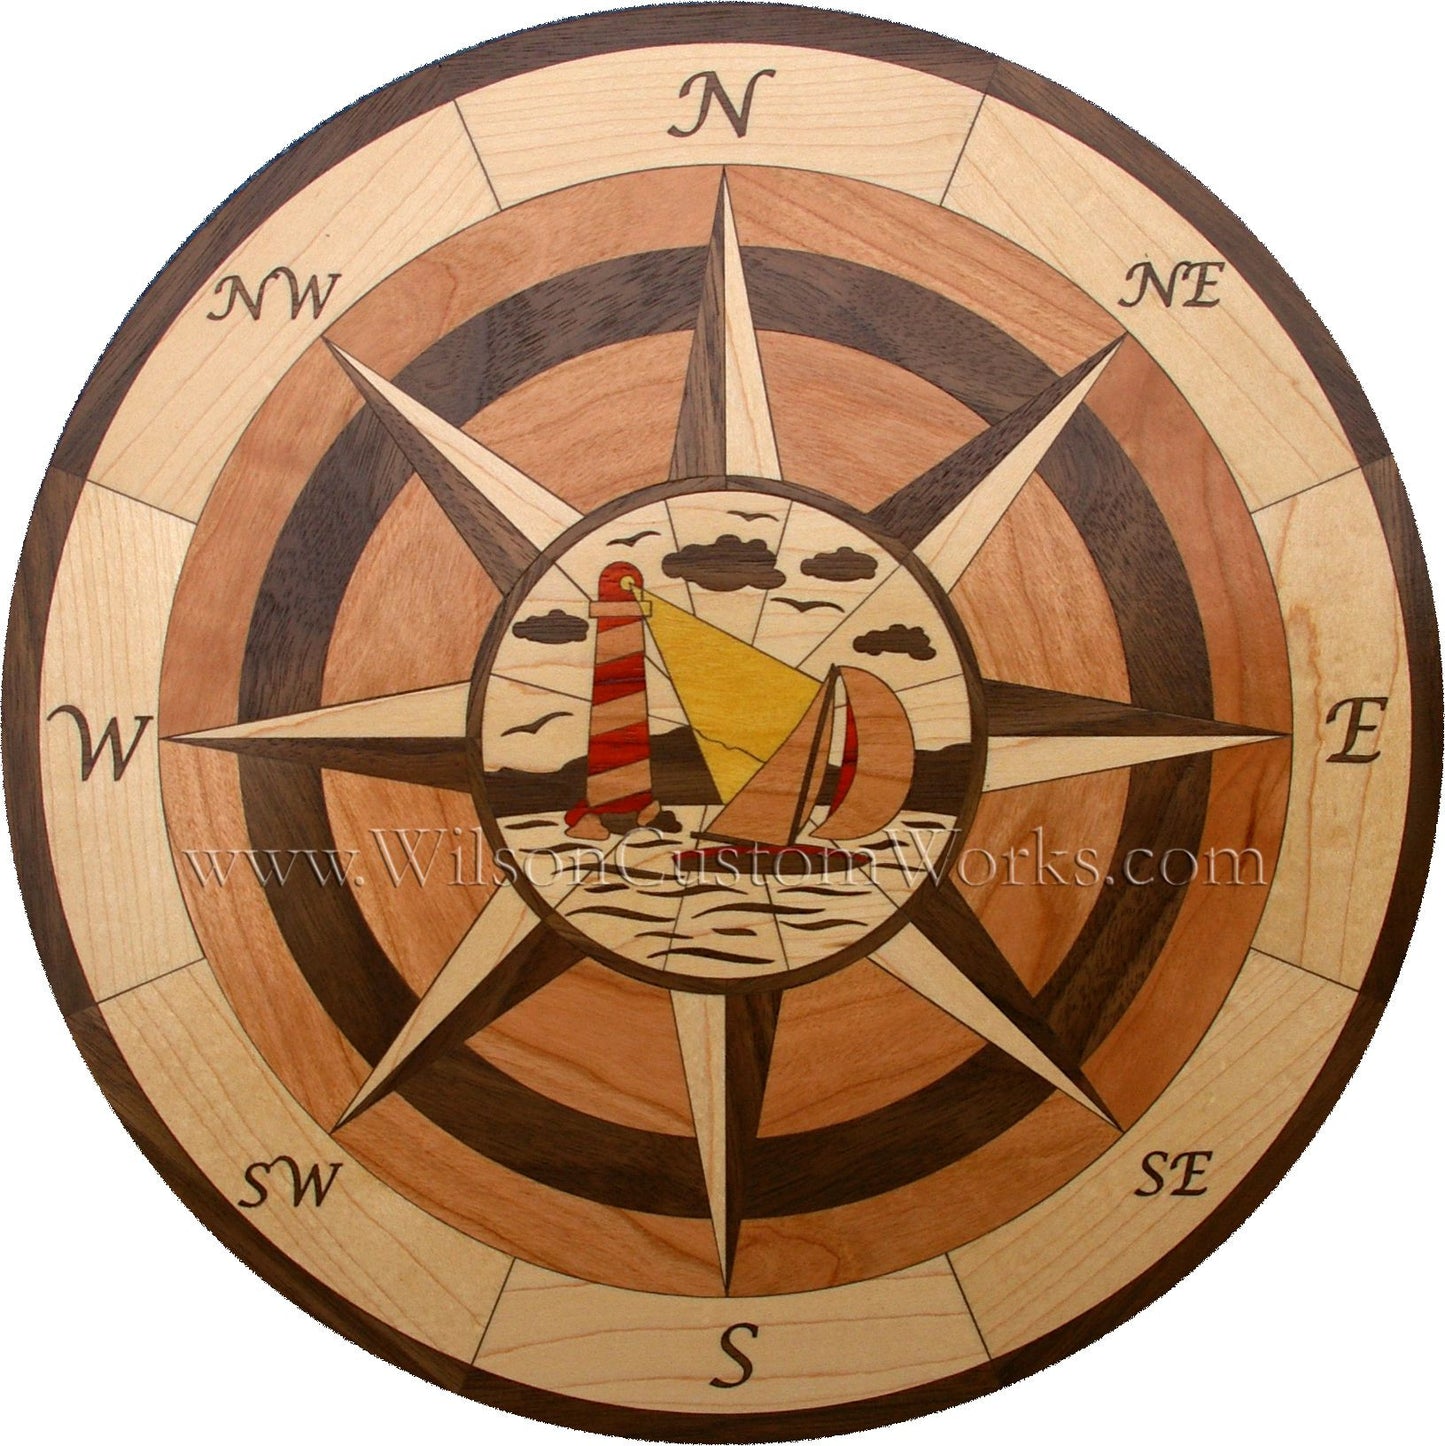 Wilson Custom Works hardwood wood floor inlay medallion nova scotia compass rose nautical design